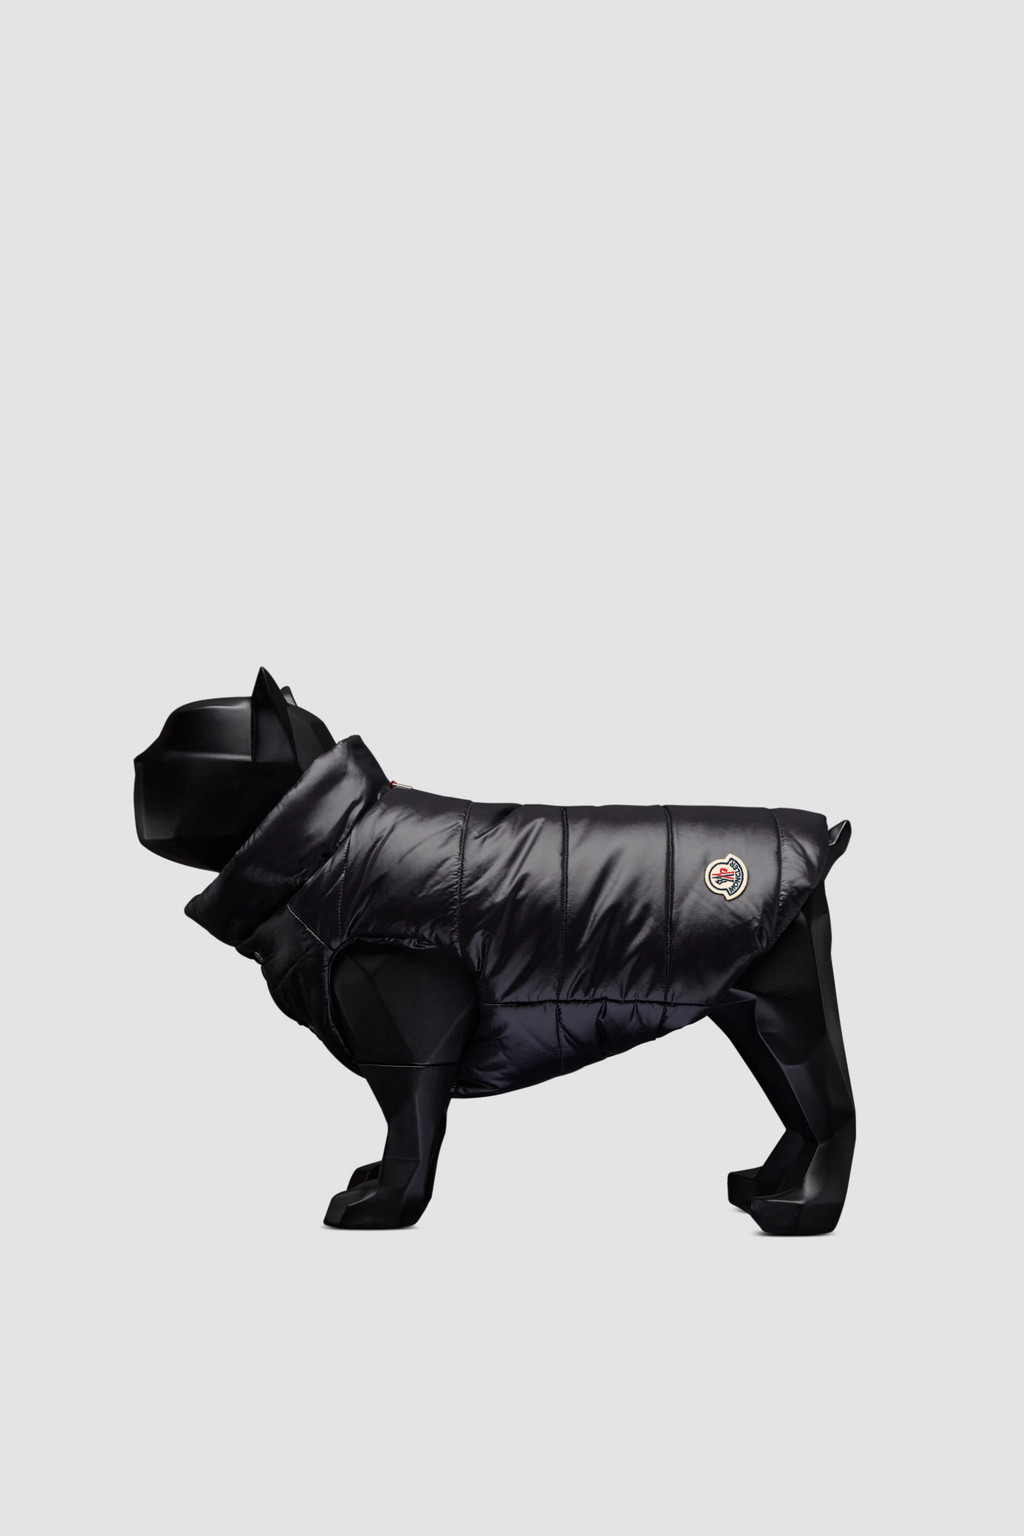 Moncler Poldo Dog Couture for Special Projects - Moncler x Poldo 